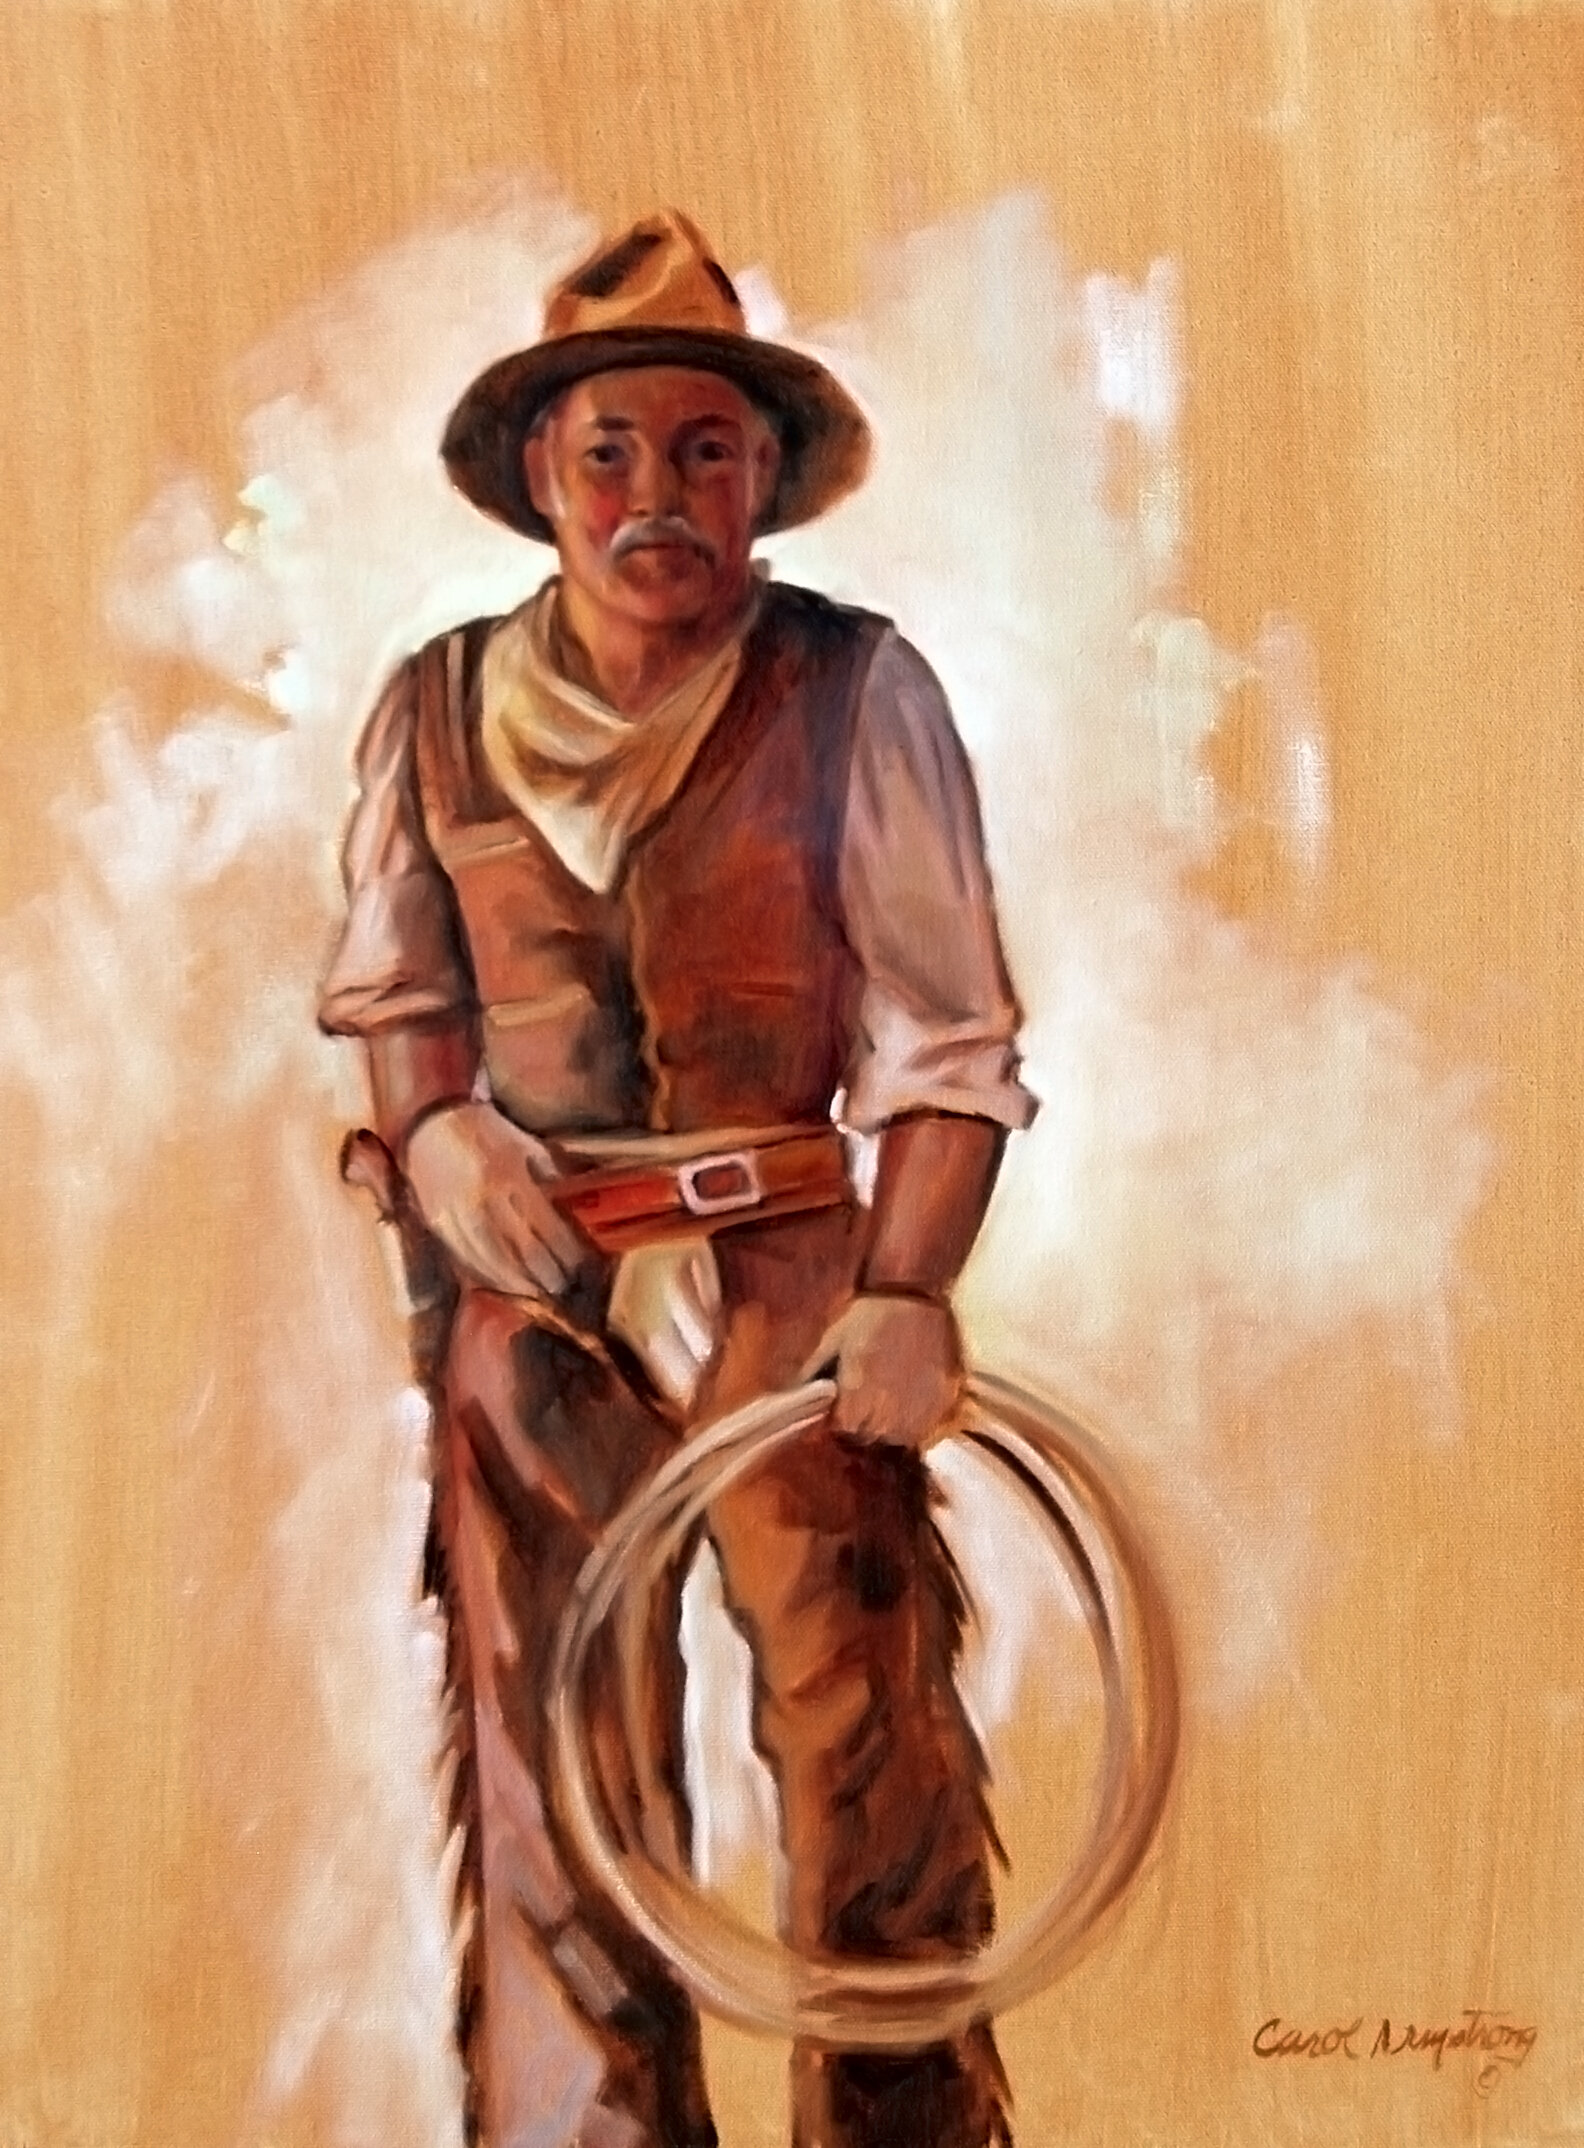 Cowboy and his Rope